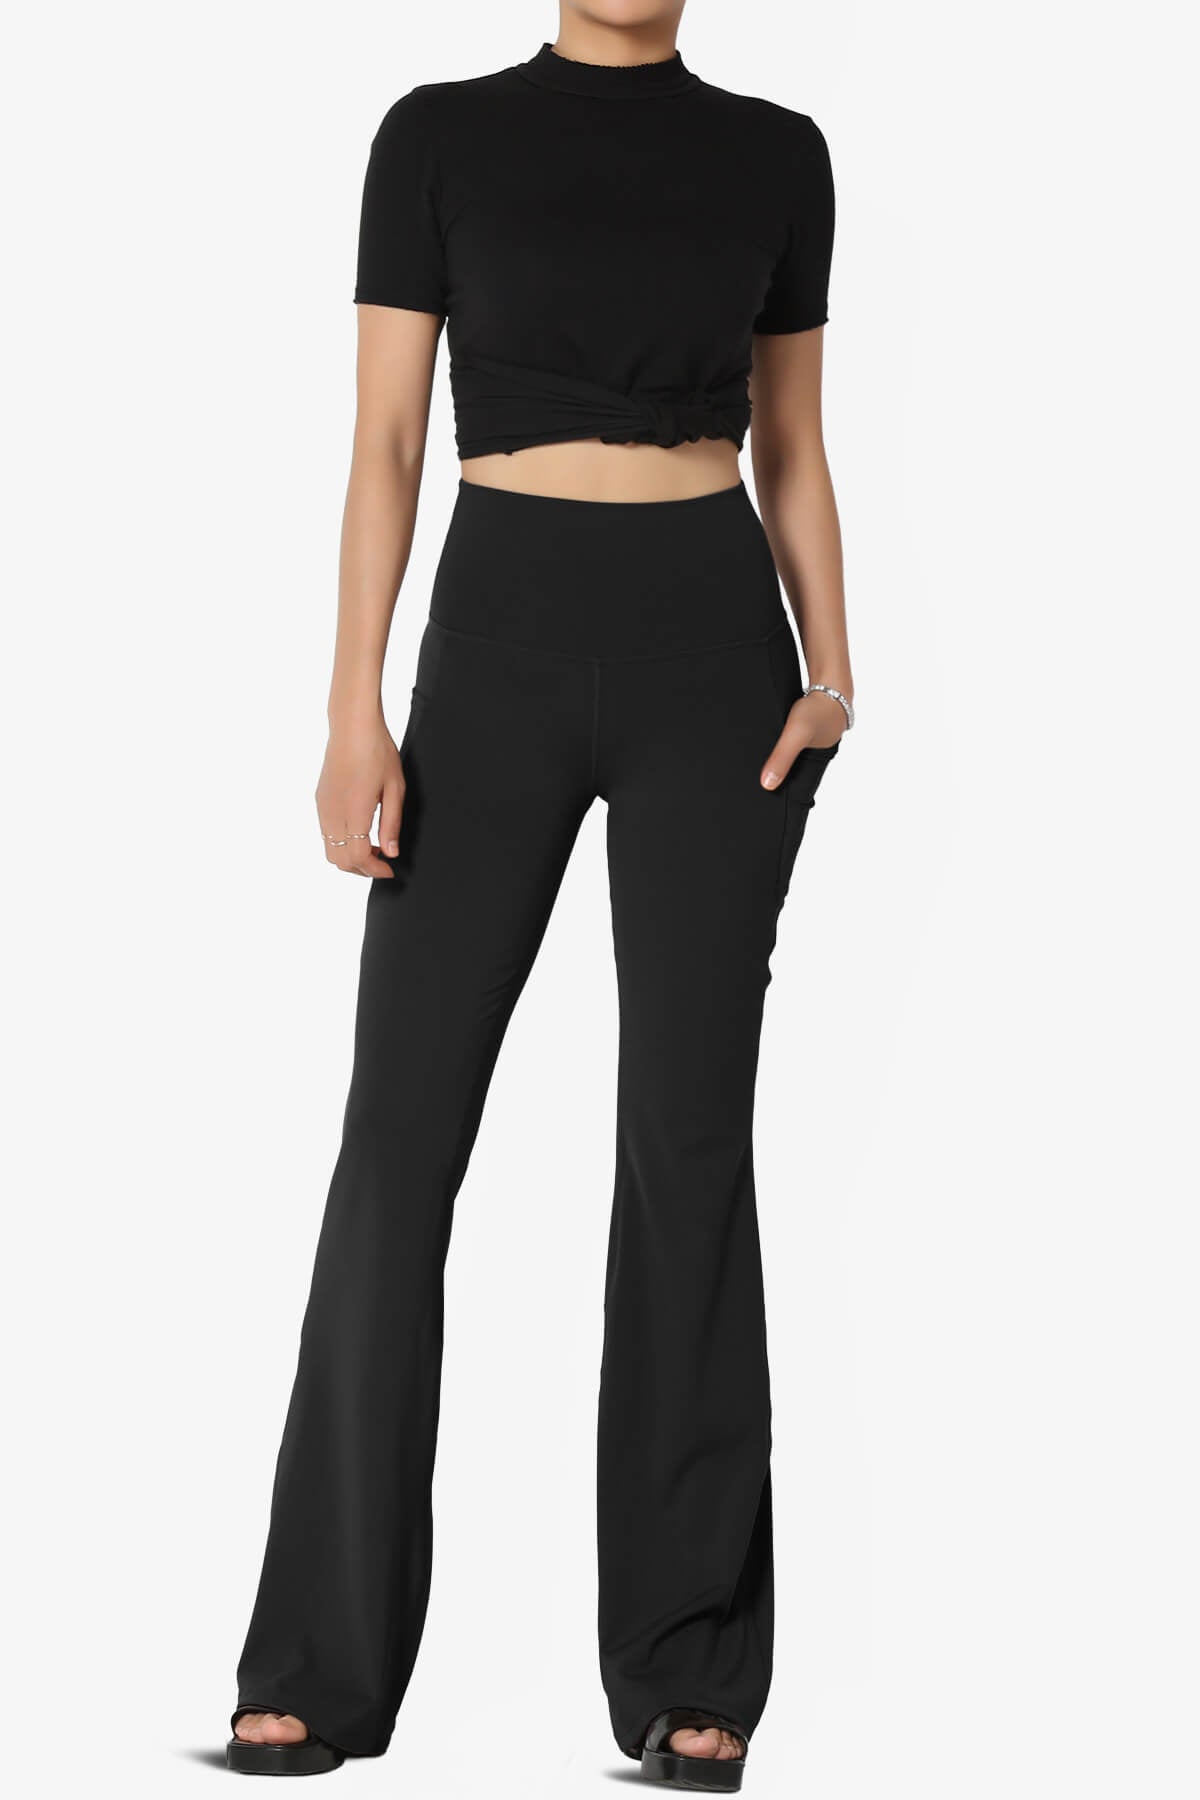 Gemma Athletic Pocket Flare Yoga Pants BLACK_6